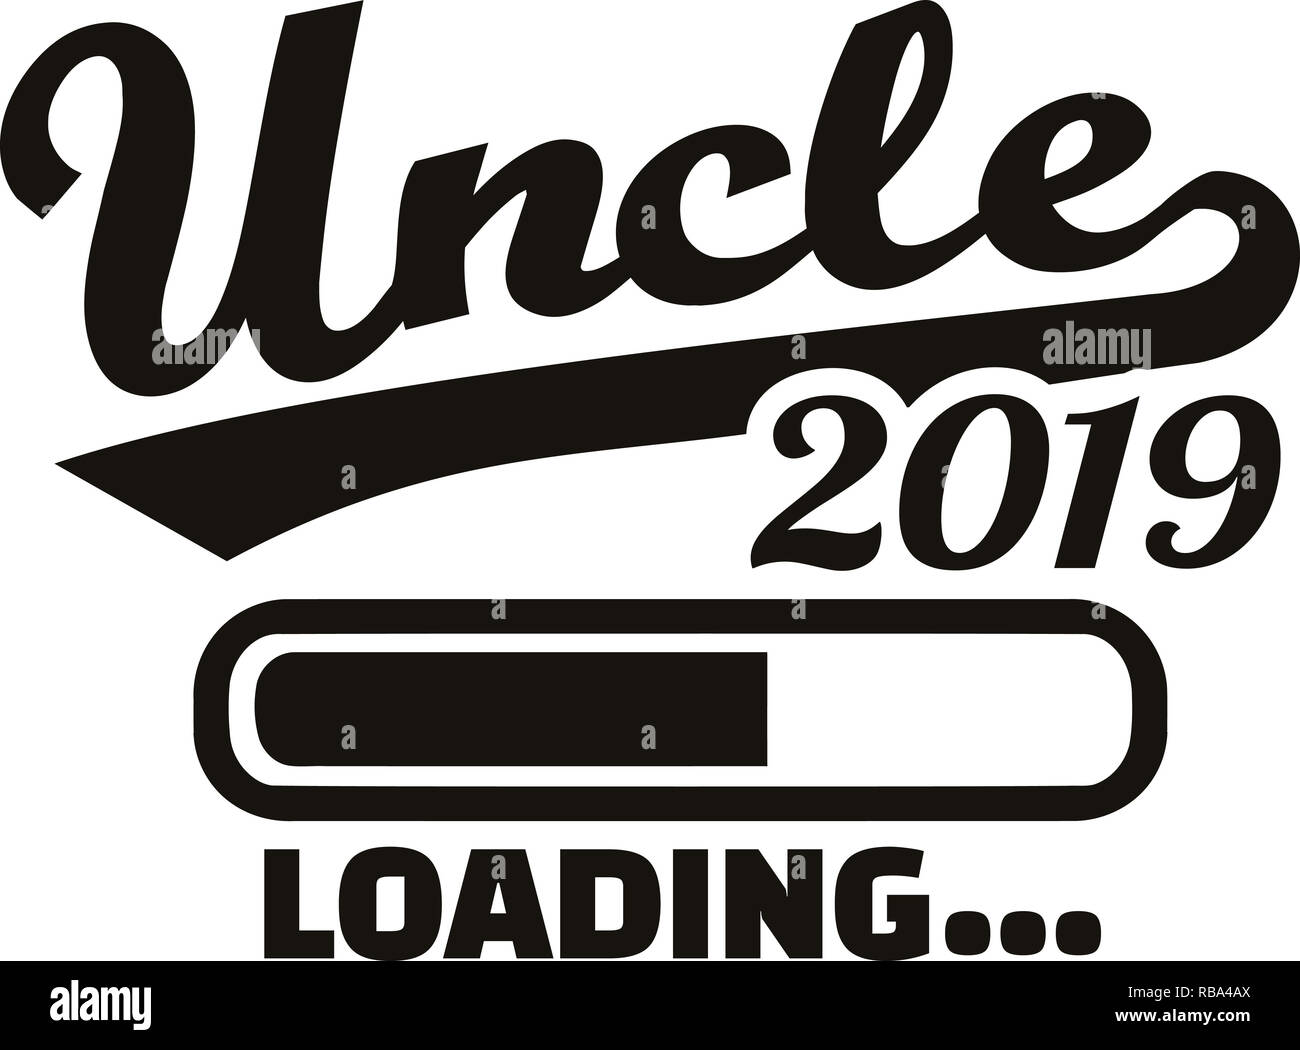 Uncle loading bar 2019 Stock Photo